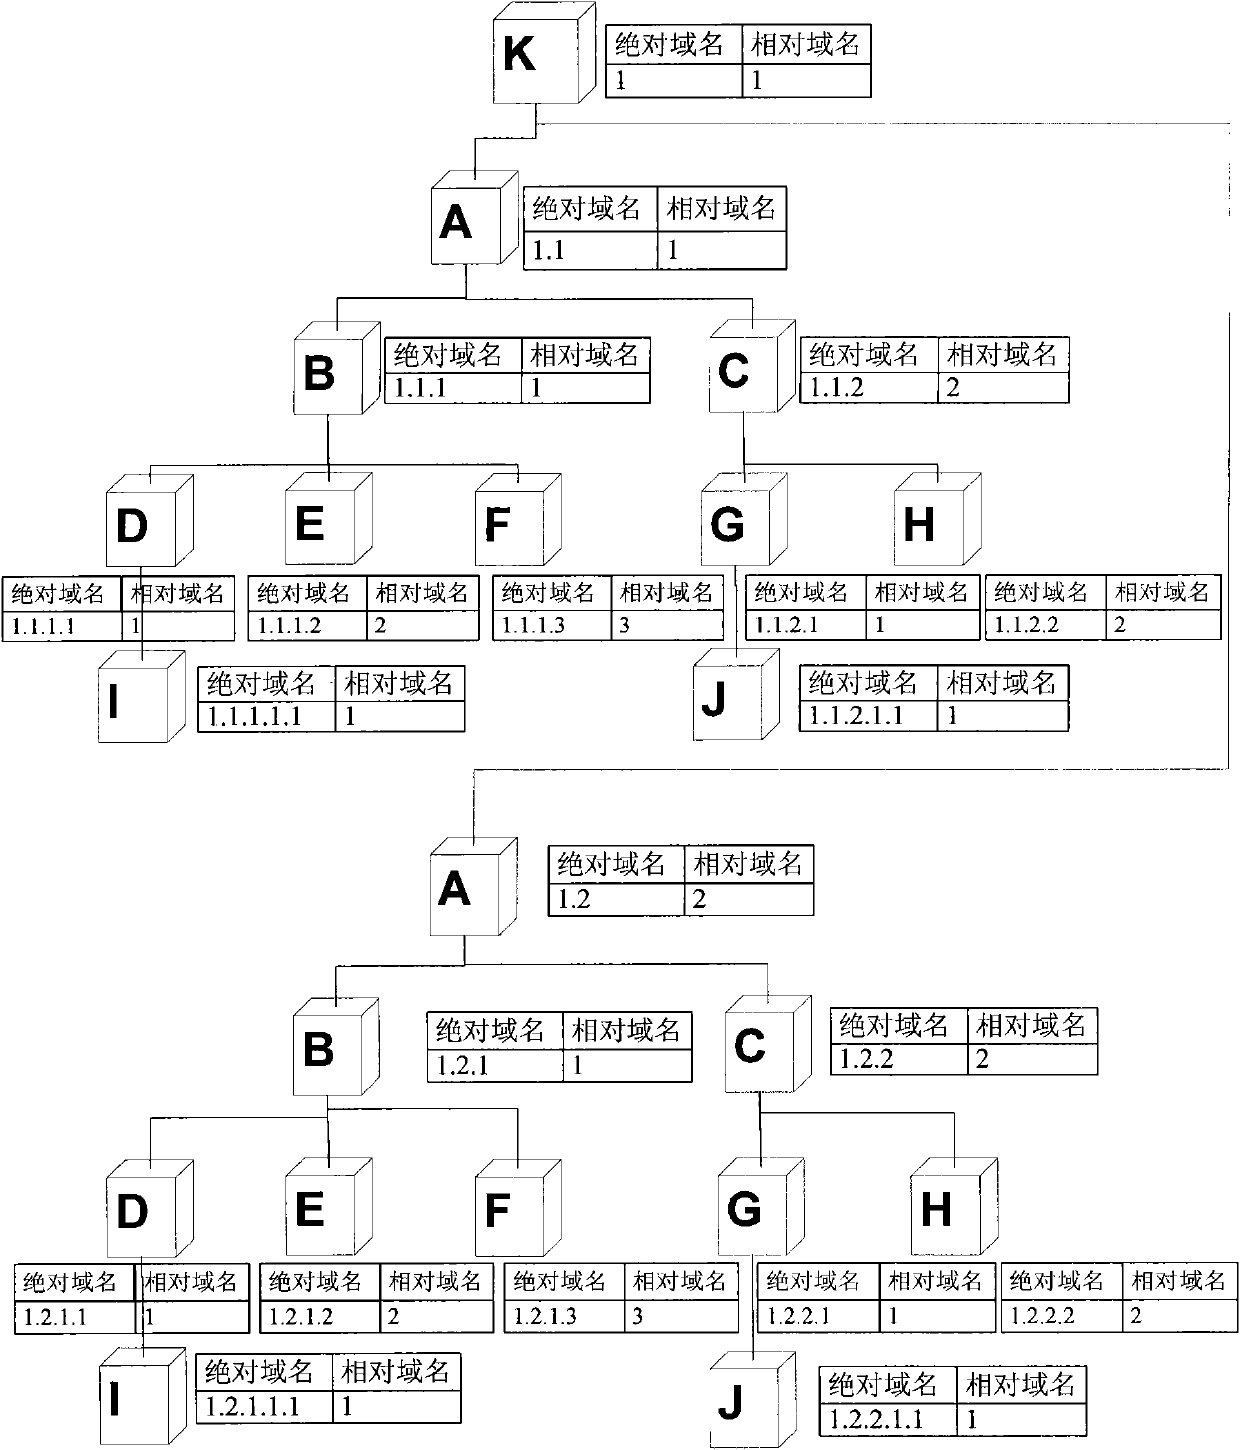 Route addressing method based on tree network